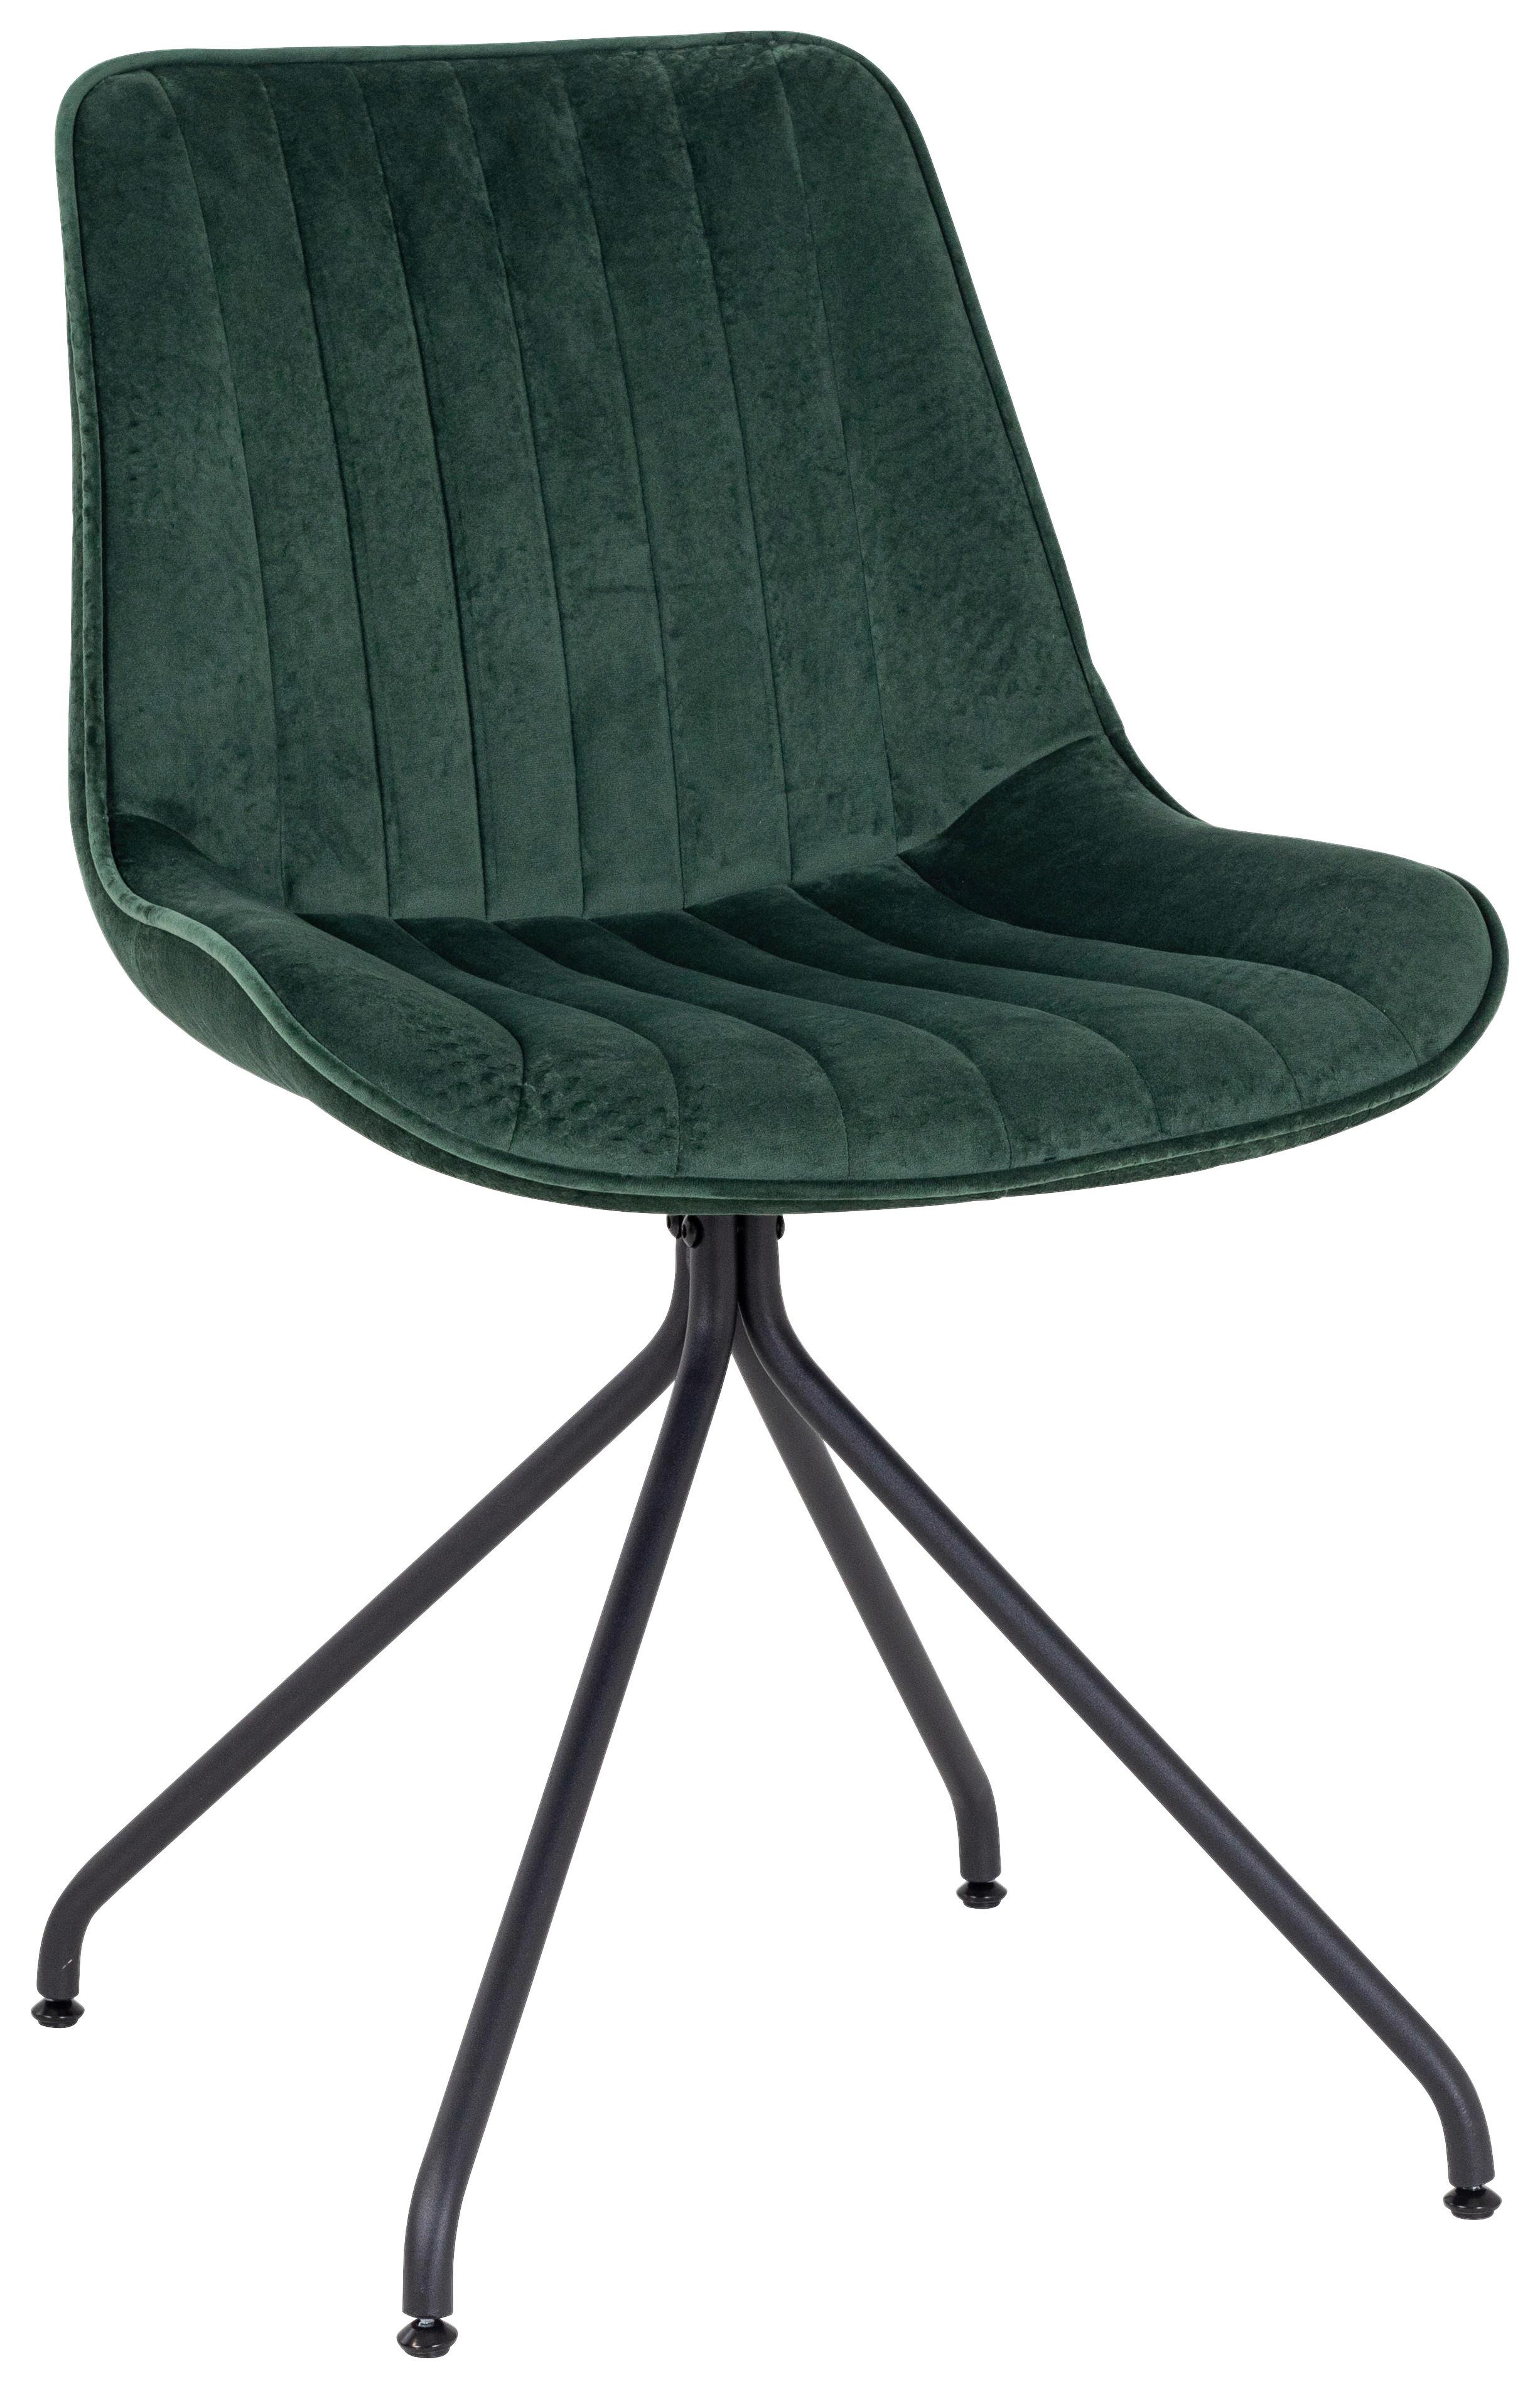 Stuhl aus Samt in Grün - Schwarz/Grün, MODERN, Textil/Metall (50/83,5/51cm) - Modern Living